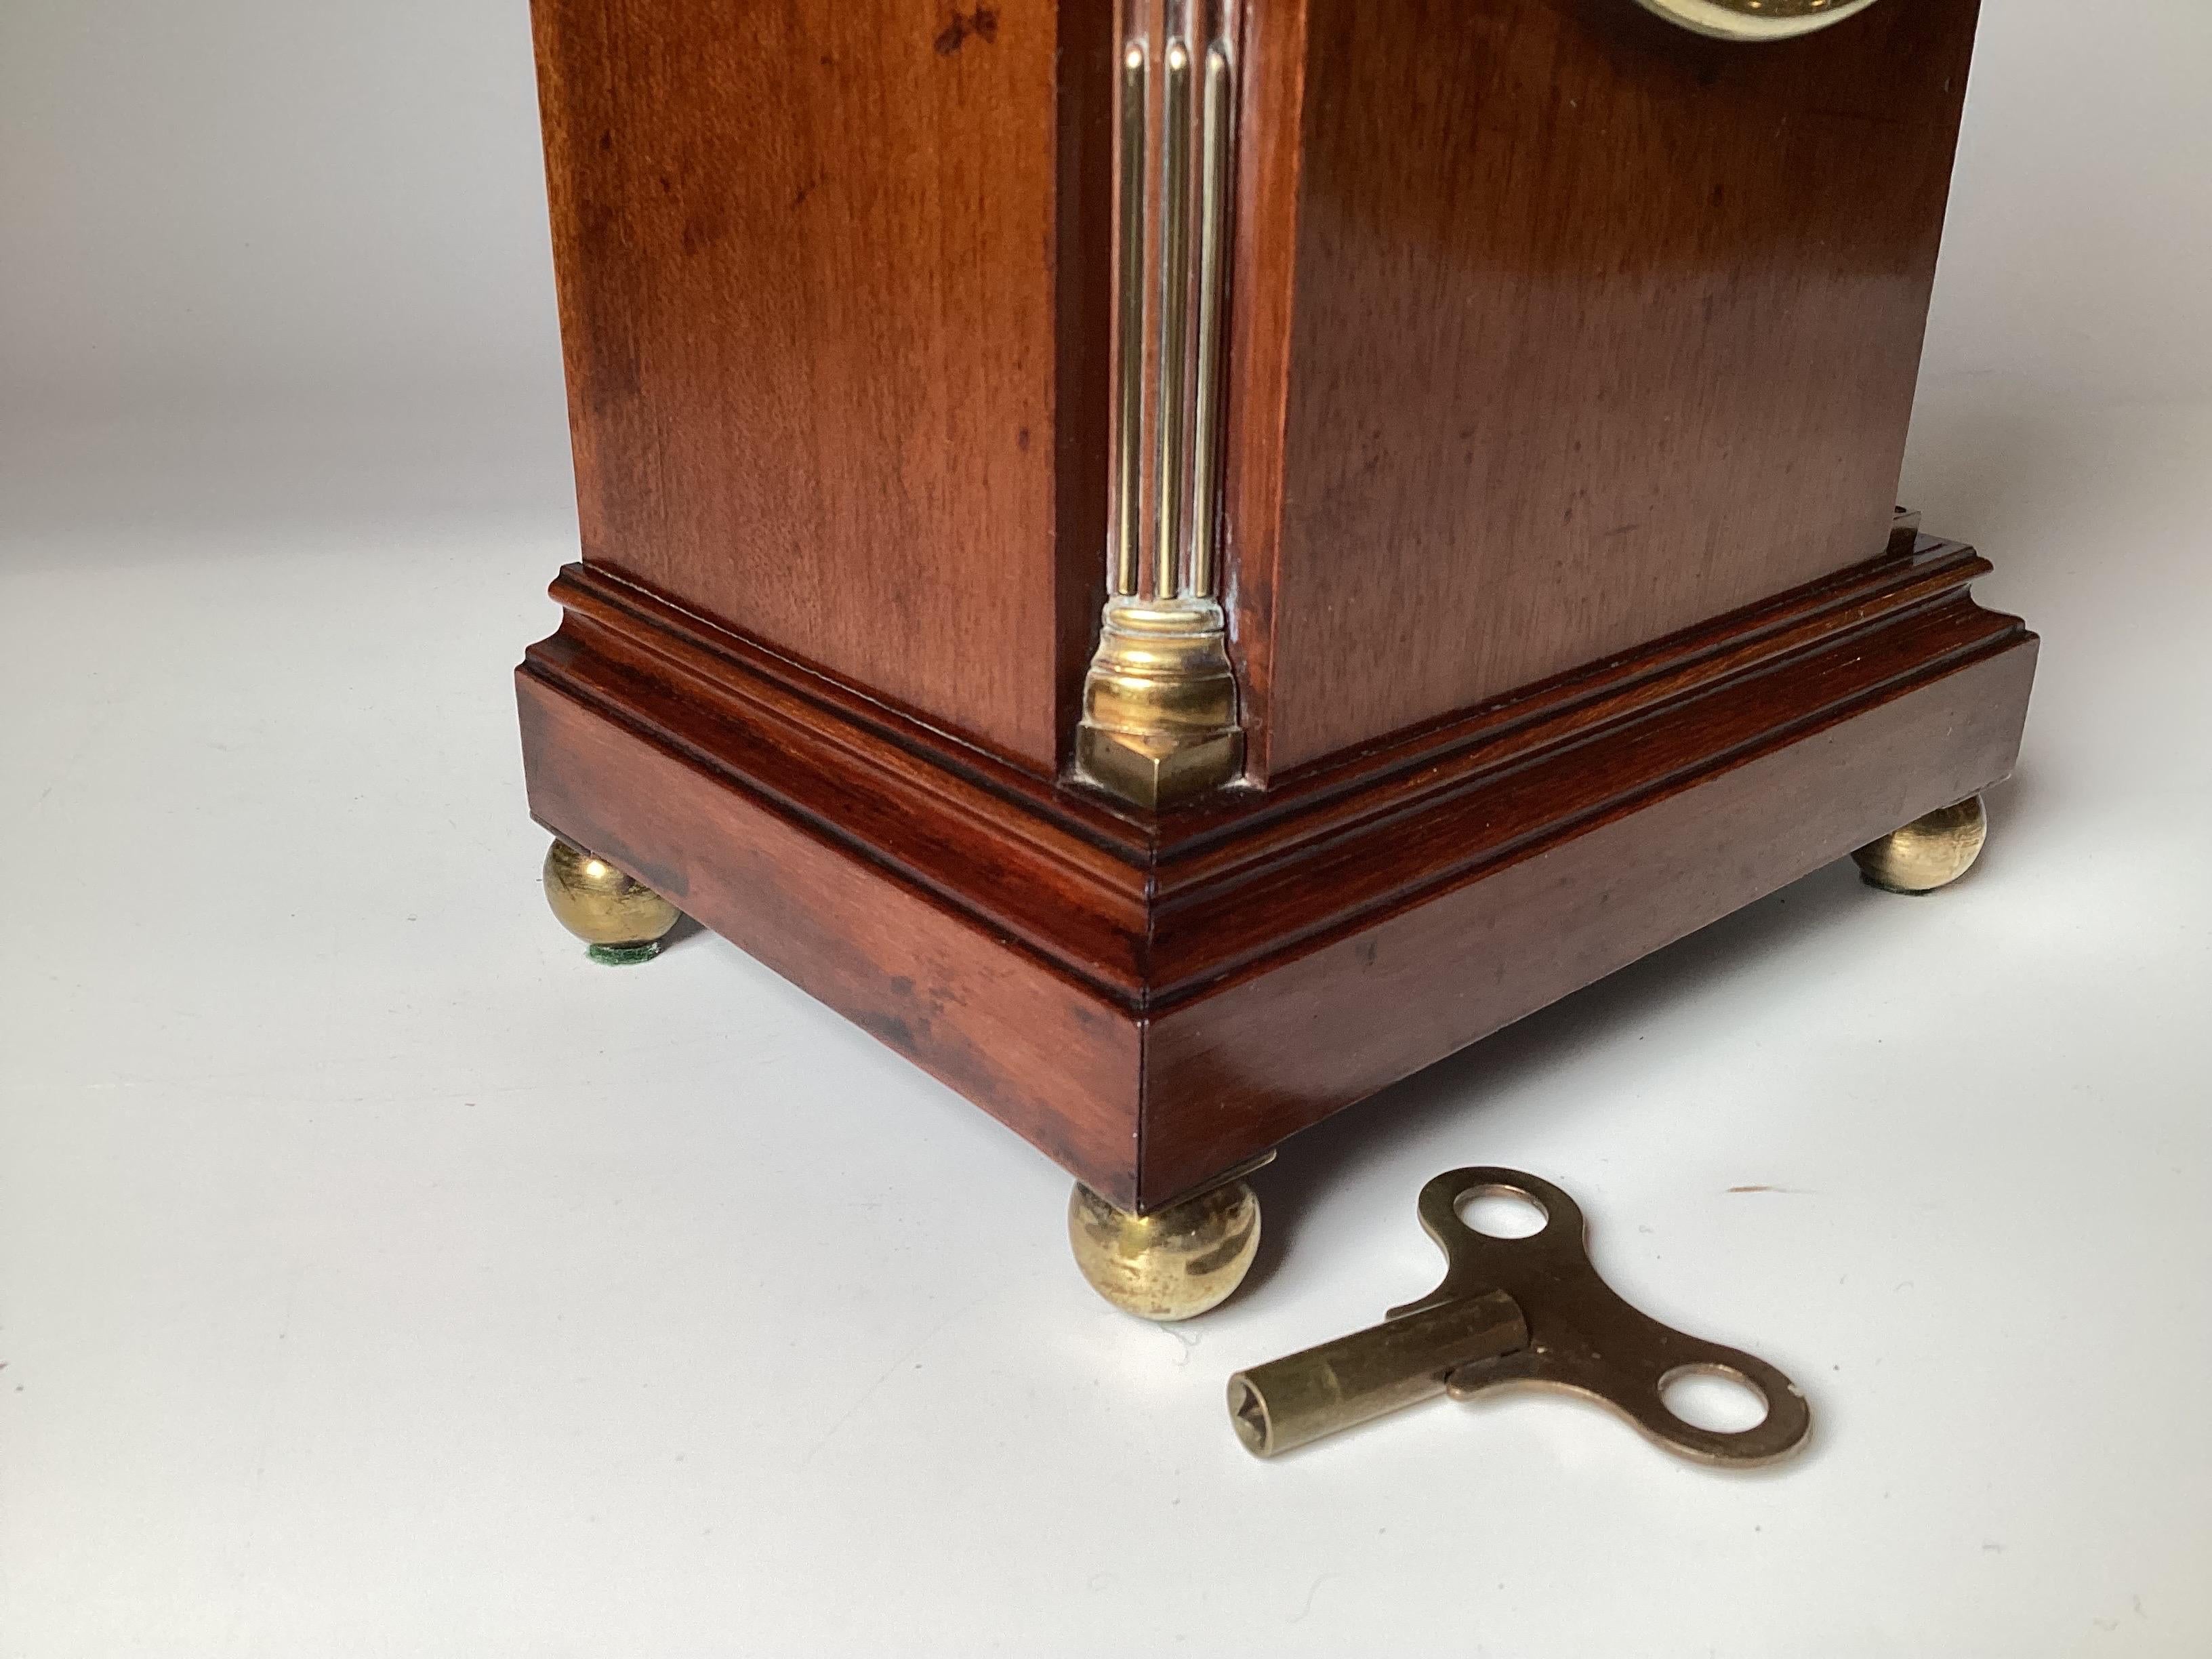 Brass A Diminutive French Mahogany Mantel Clock, Retailed by Mappin & Webb, 19th Cent.